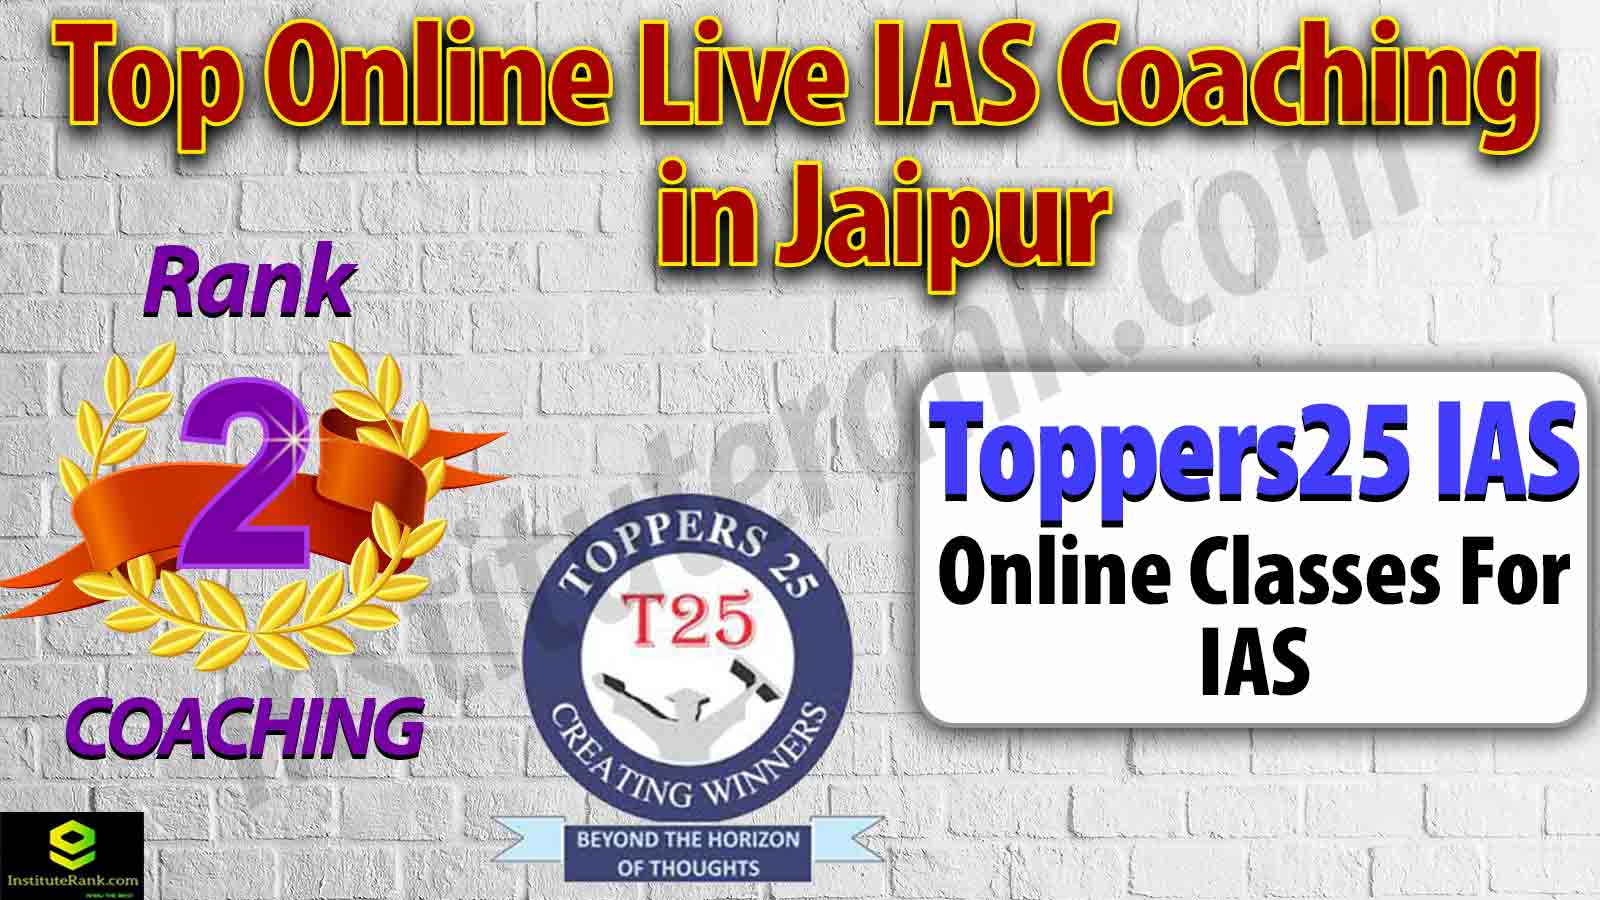 Top Online Live IAS Coaching in Jaipur